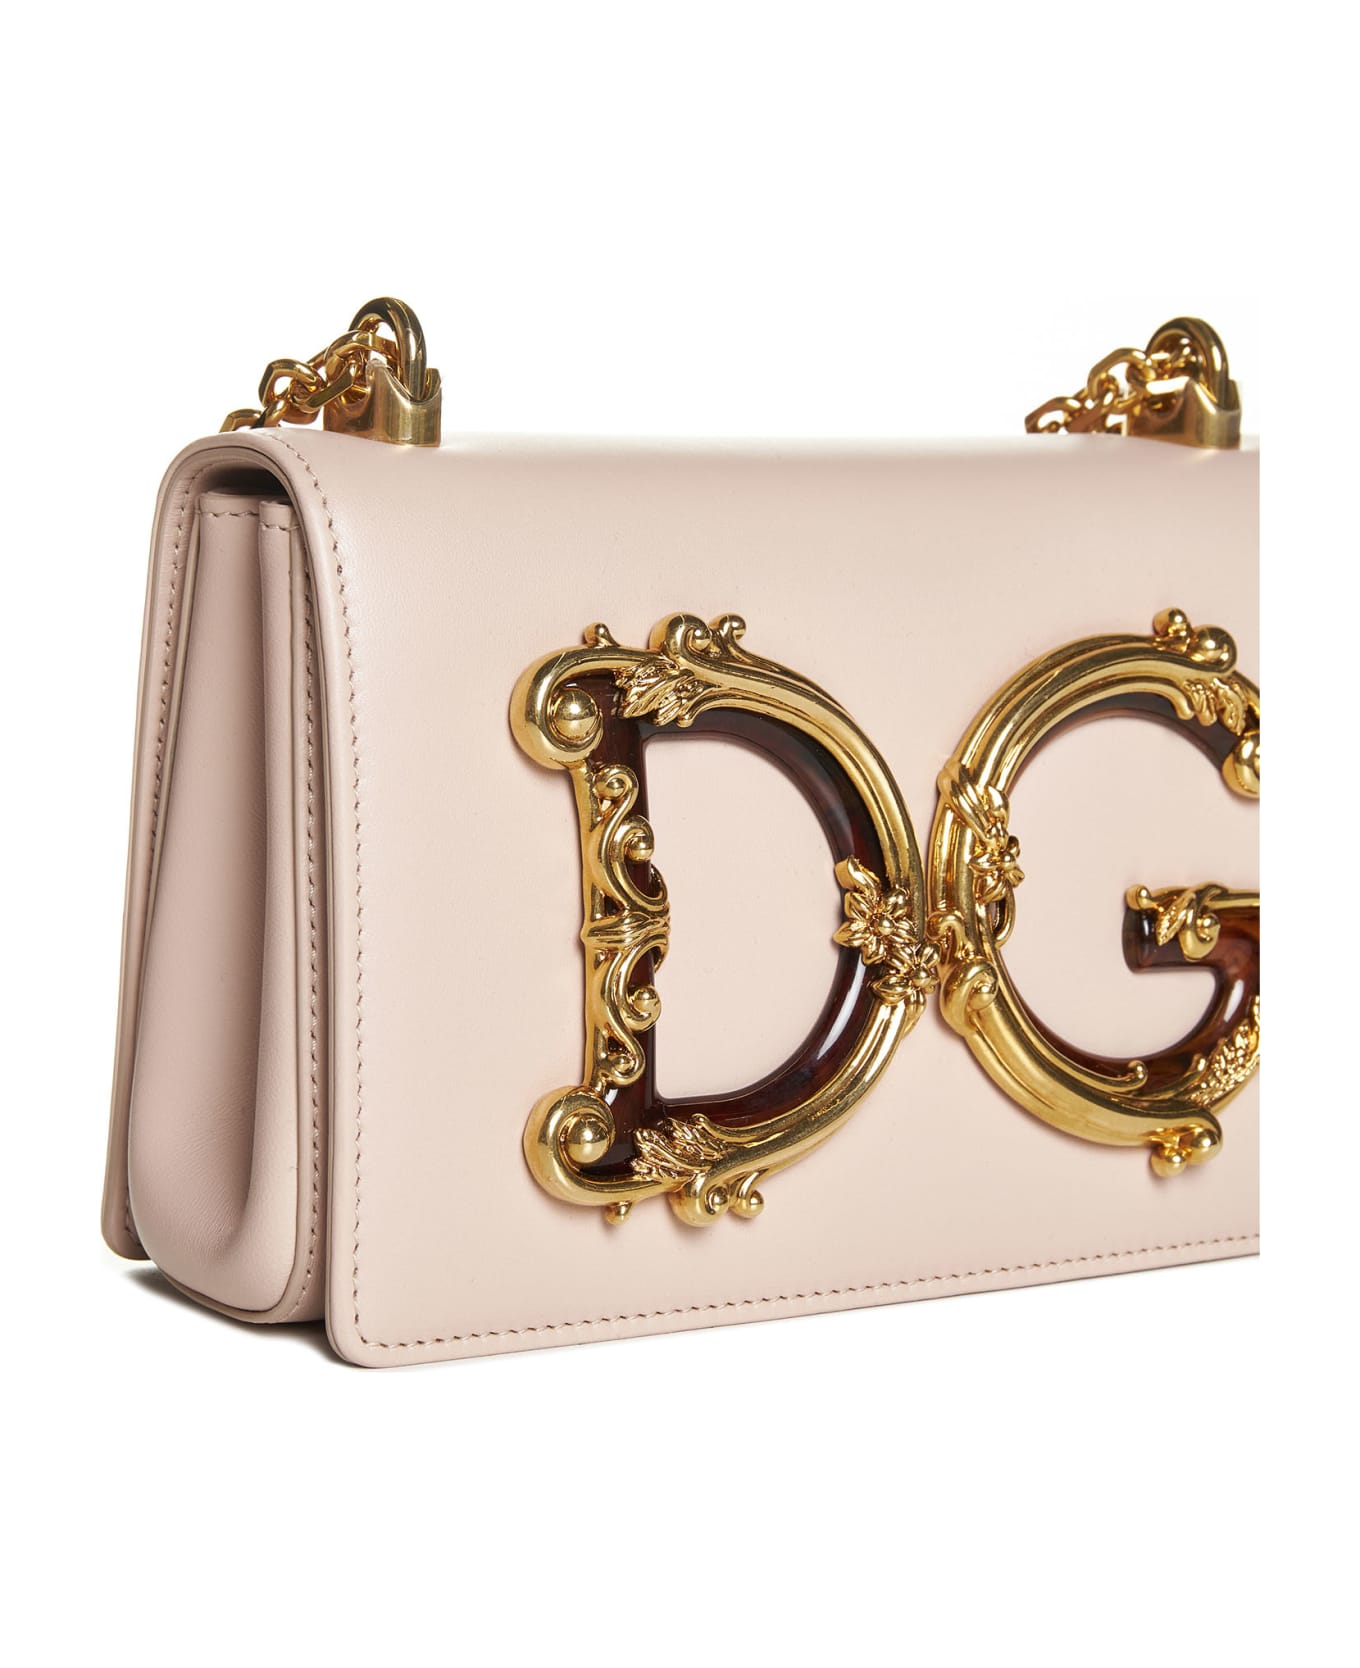 Dolce & Gabbana 'dg Girls' Crossbody Bag - POWDER